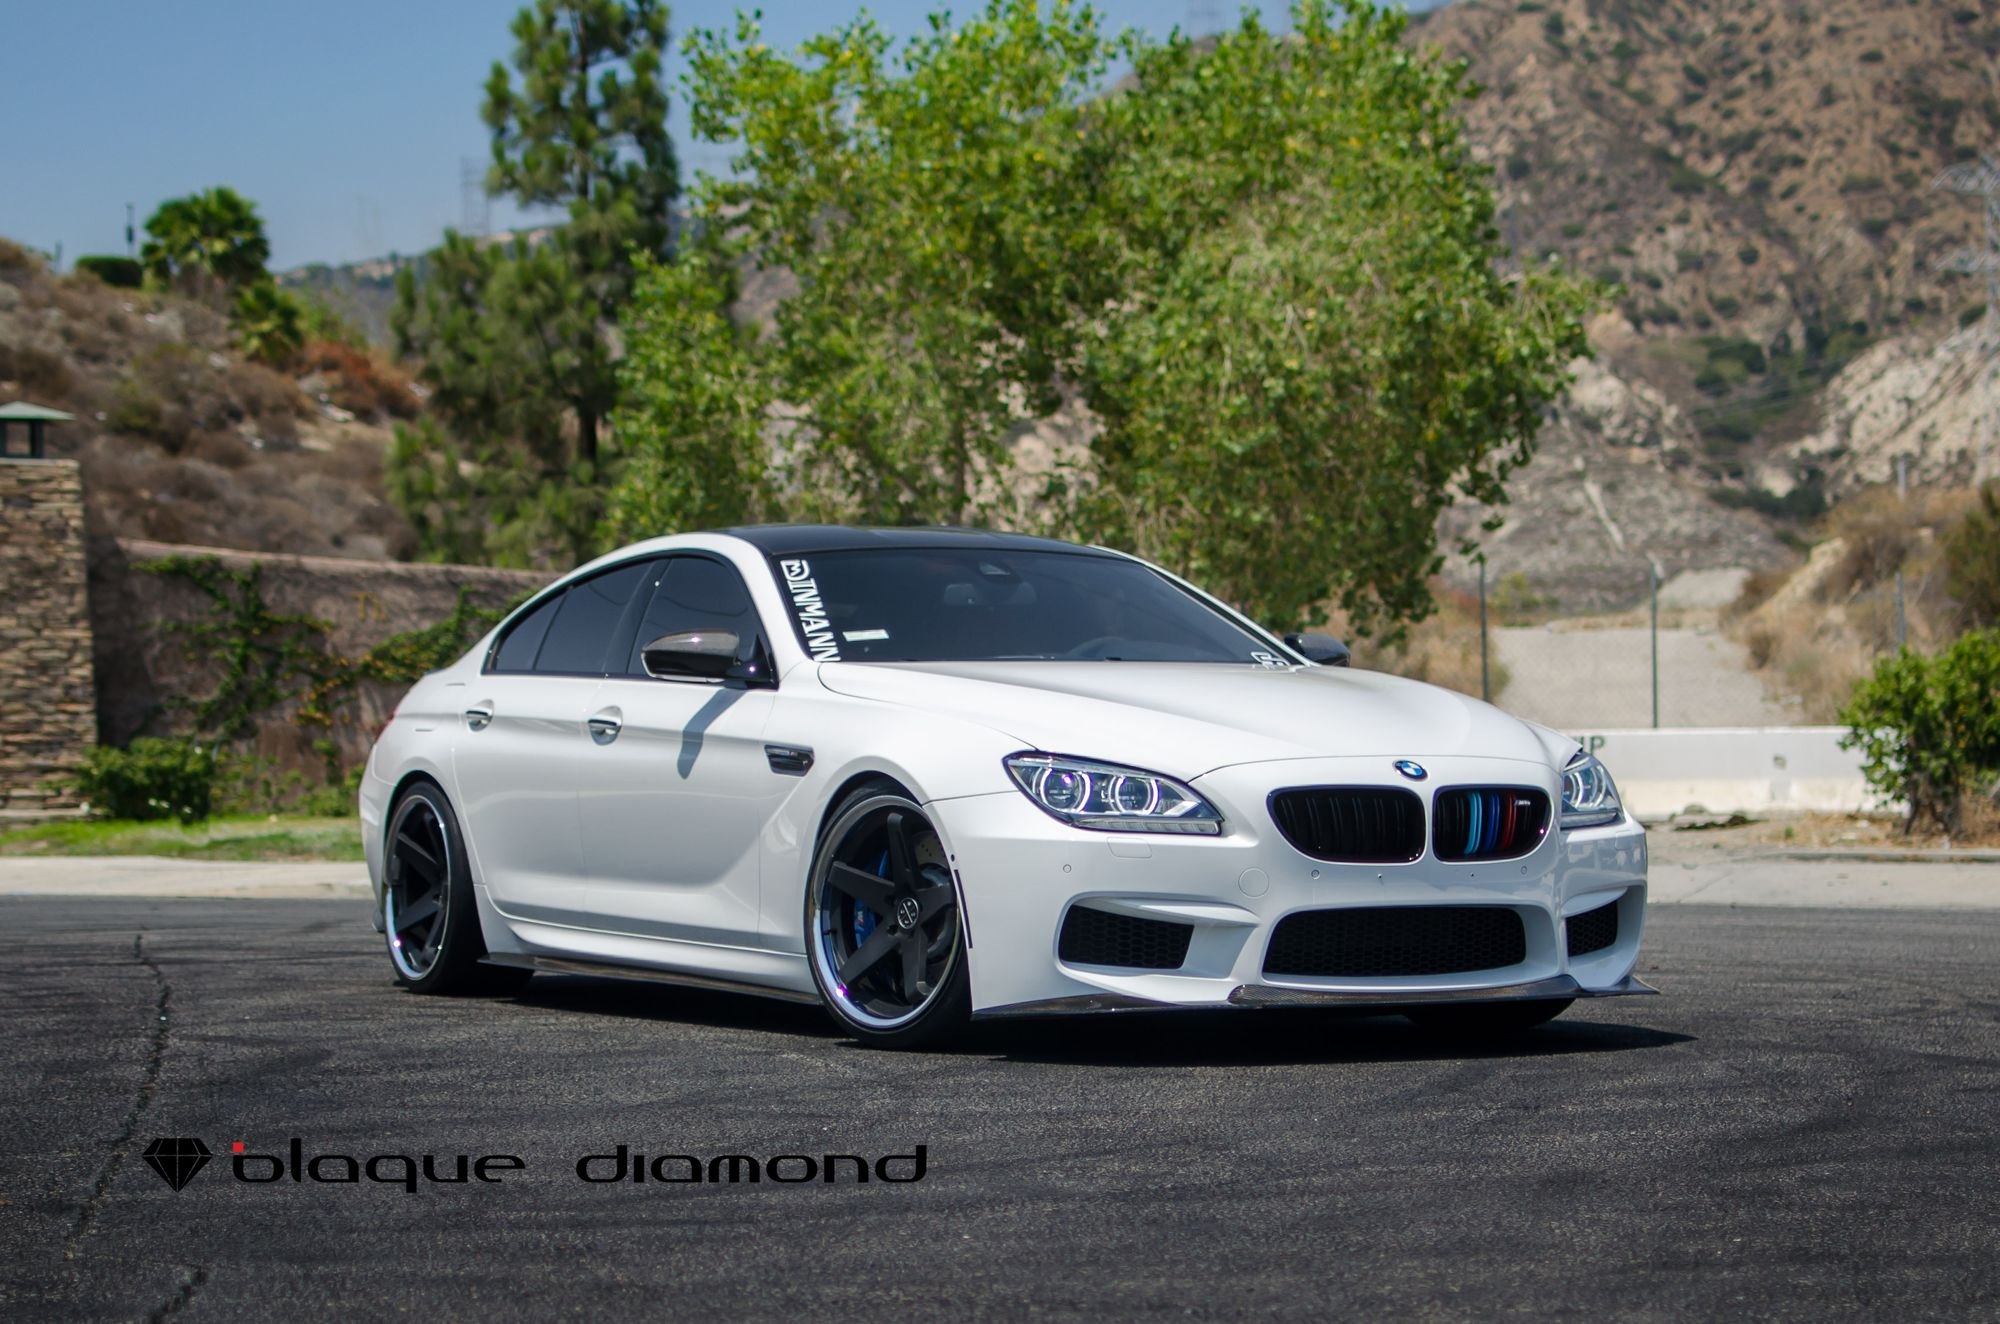 Carbon Fiber Front Lip on White BMW 6-Series - Photo by Blaque Diamond